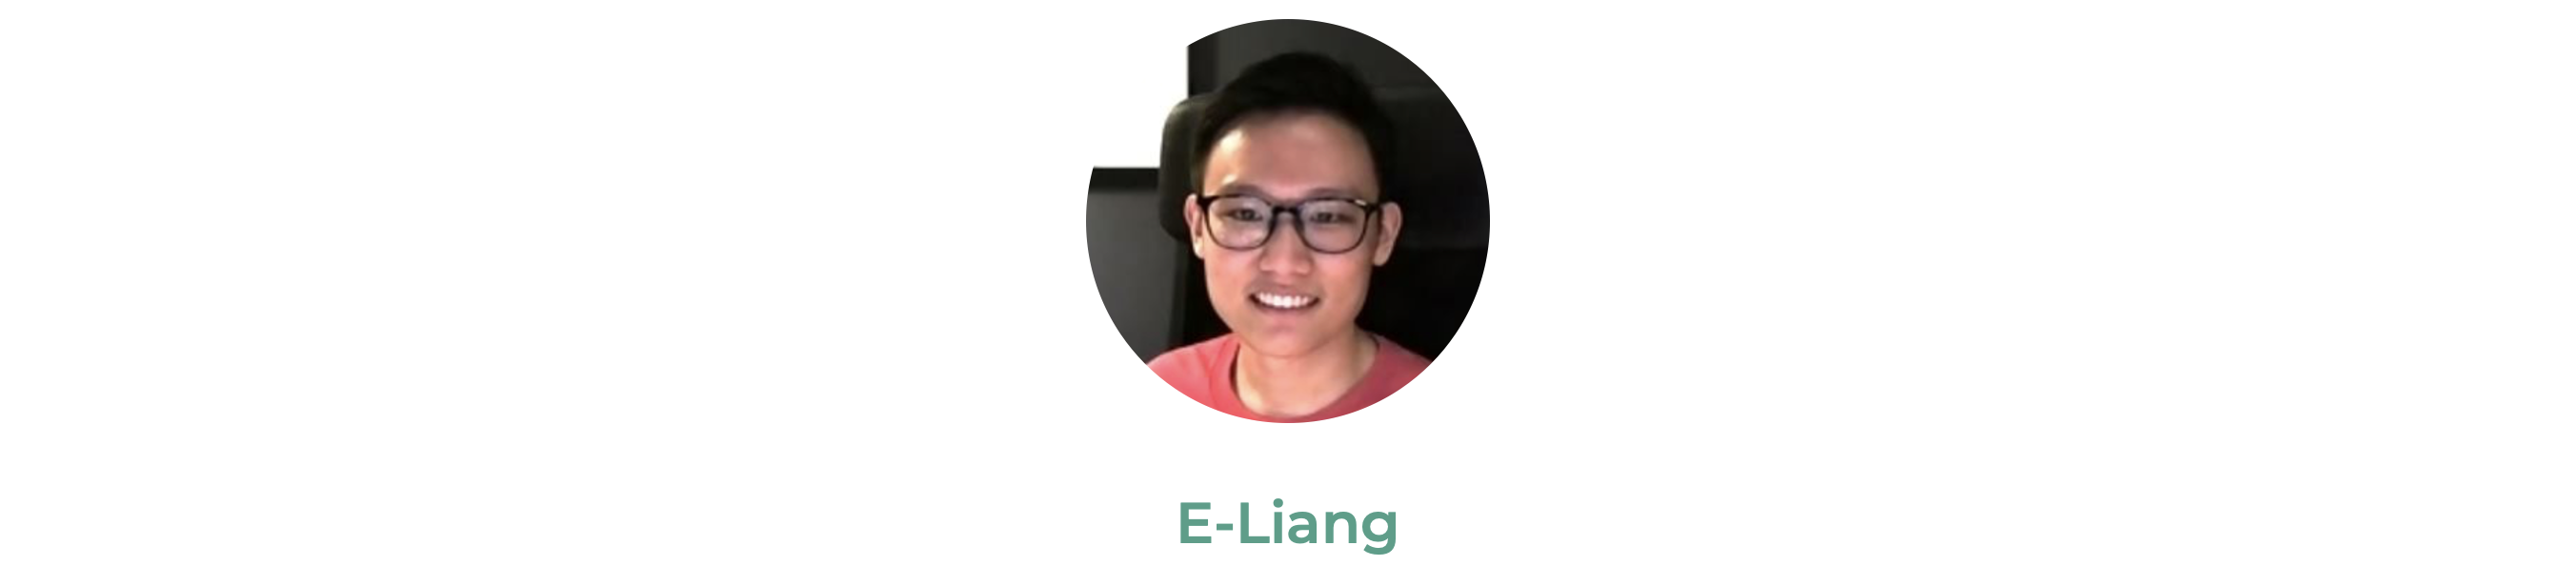 Tan E-Liang